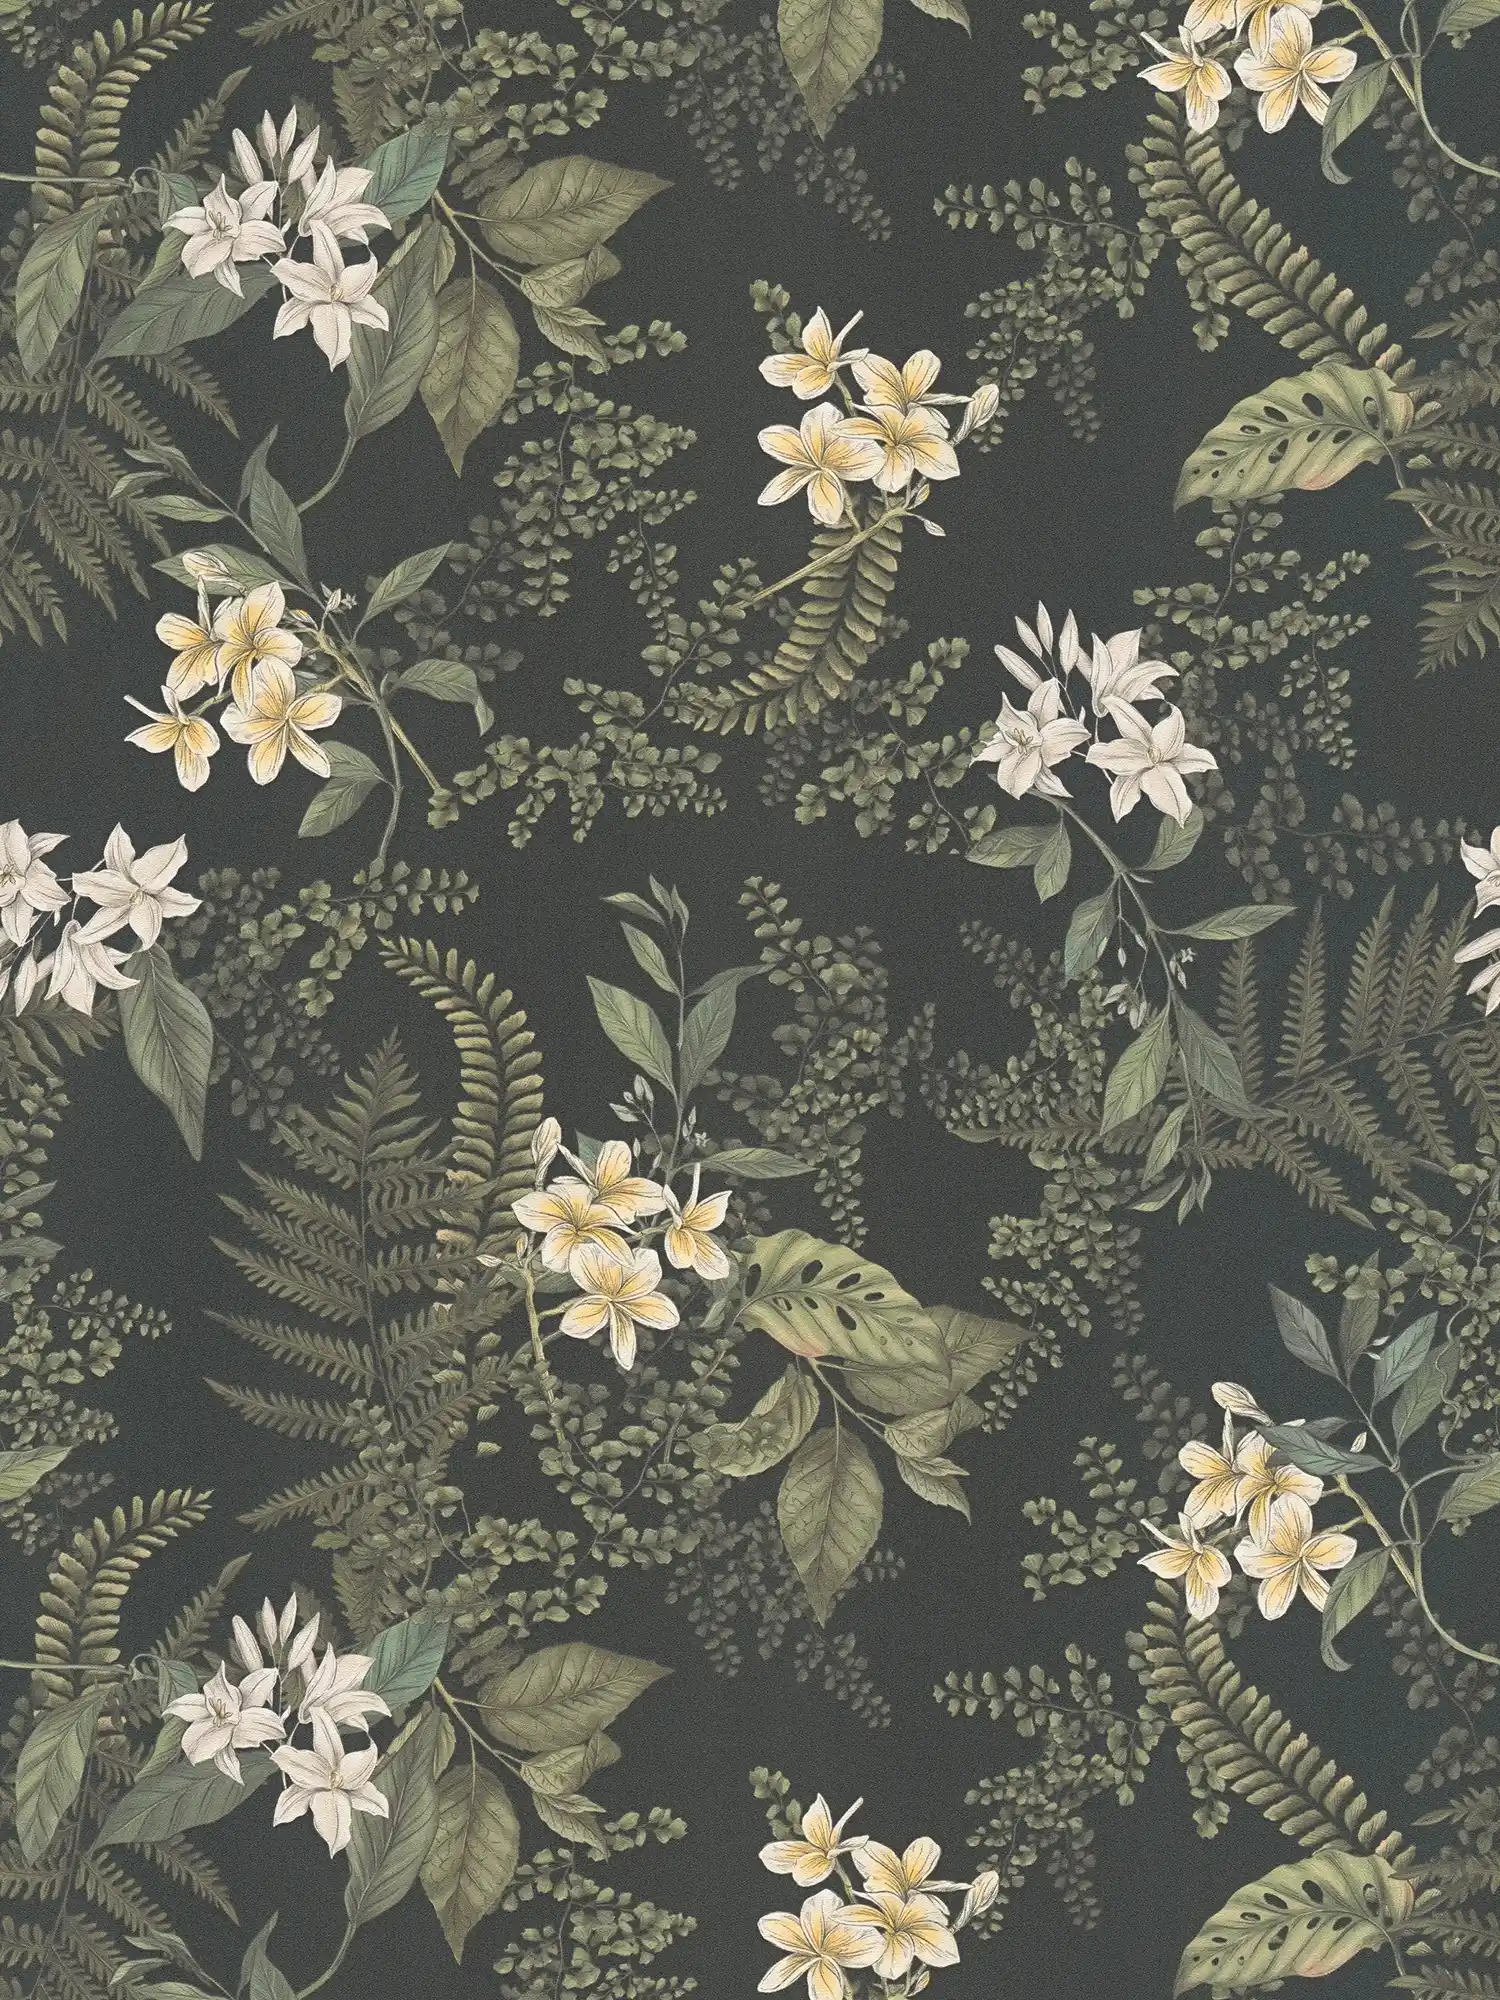 Modern wallpaper floral with flowers & grasses textured matt - black, dark green, white
